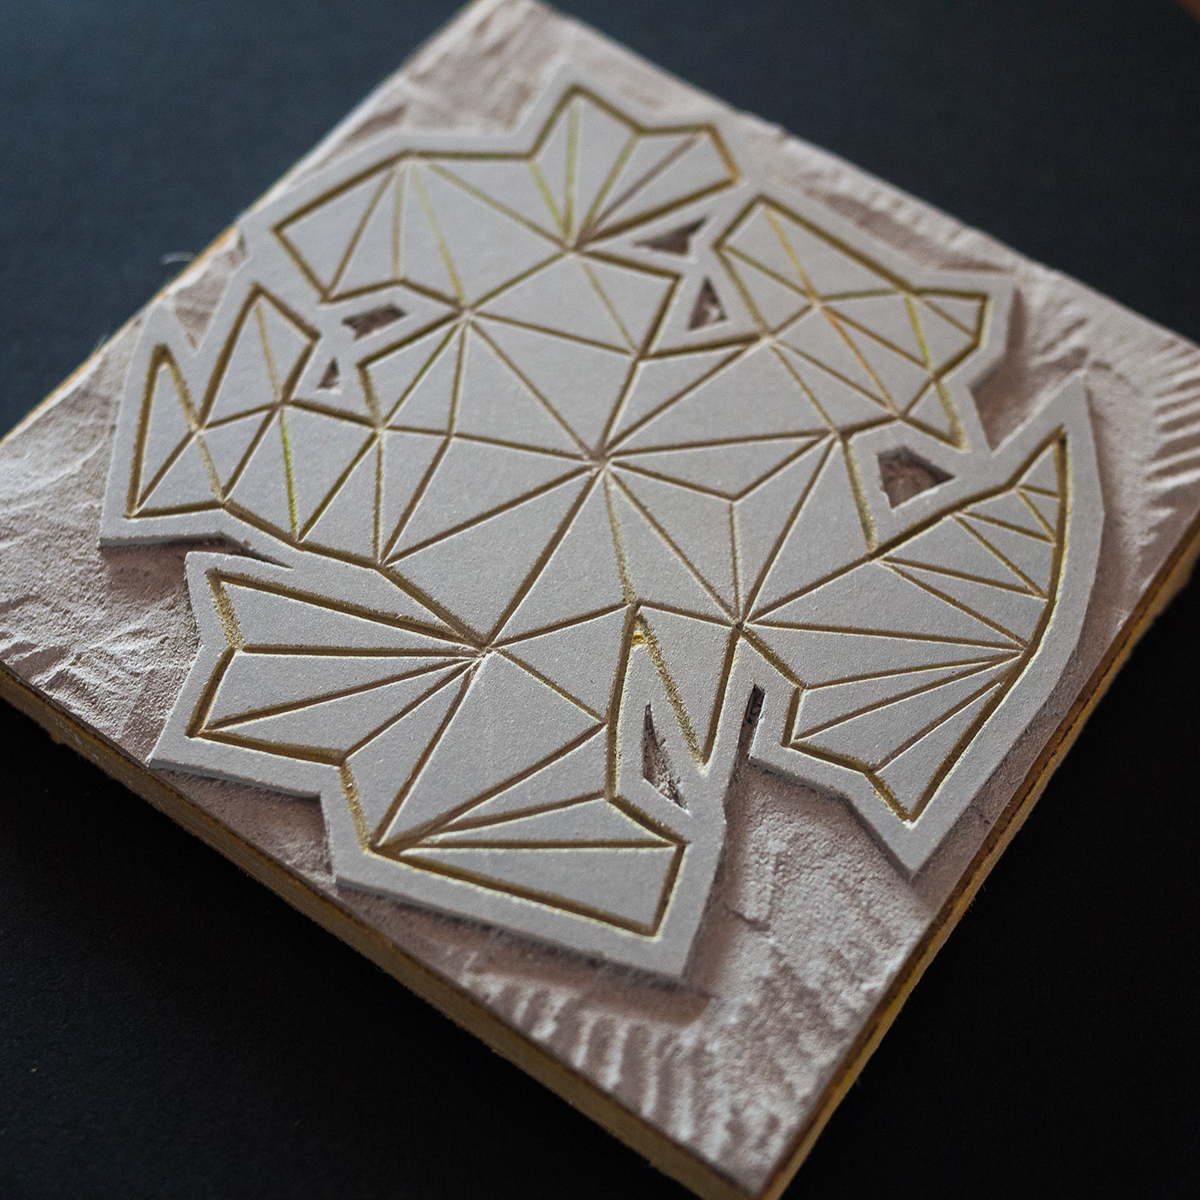 linocut print making Tahigami blockprint lino